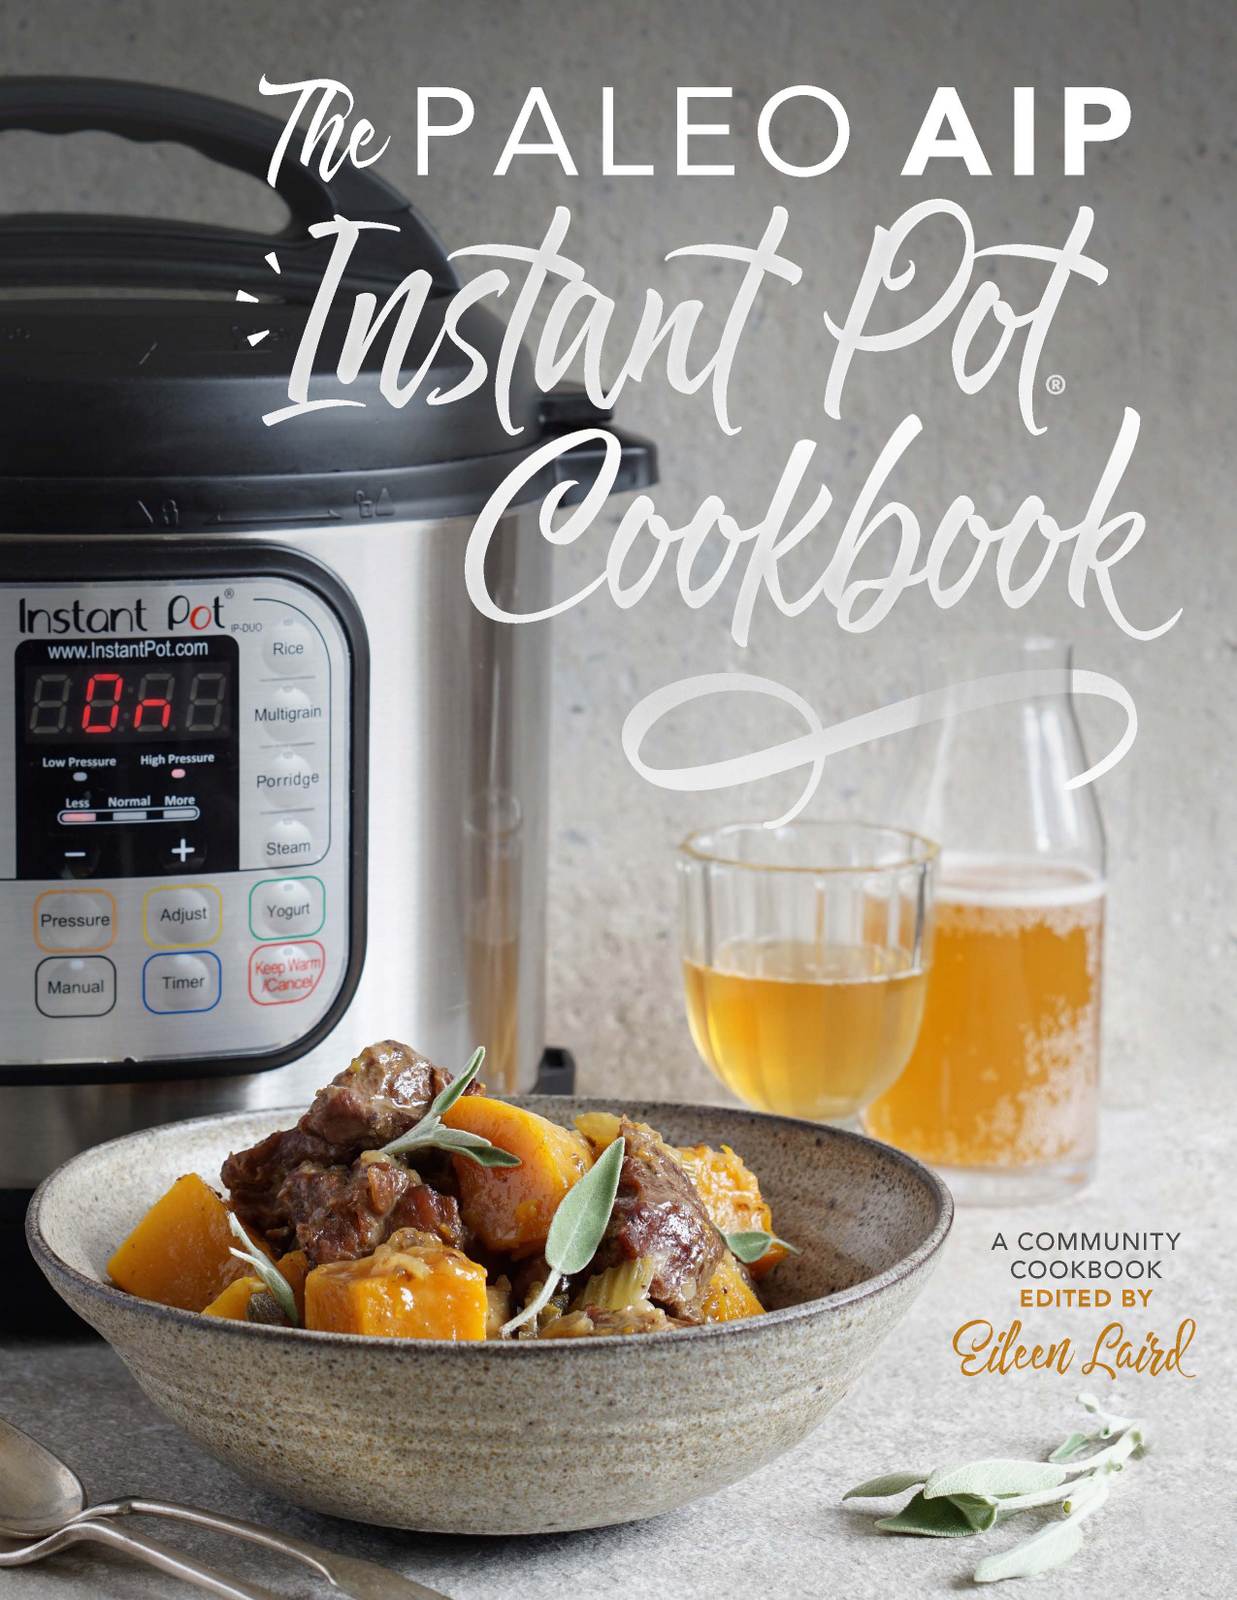 https://www.phoenixhelix.com/wp-content/uploads/2016/09/Paleo-AIP-Instant-Pot-Cookbook-Cover-Small.jpg